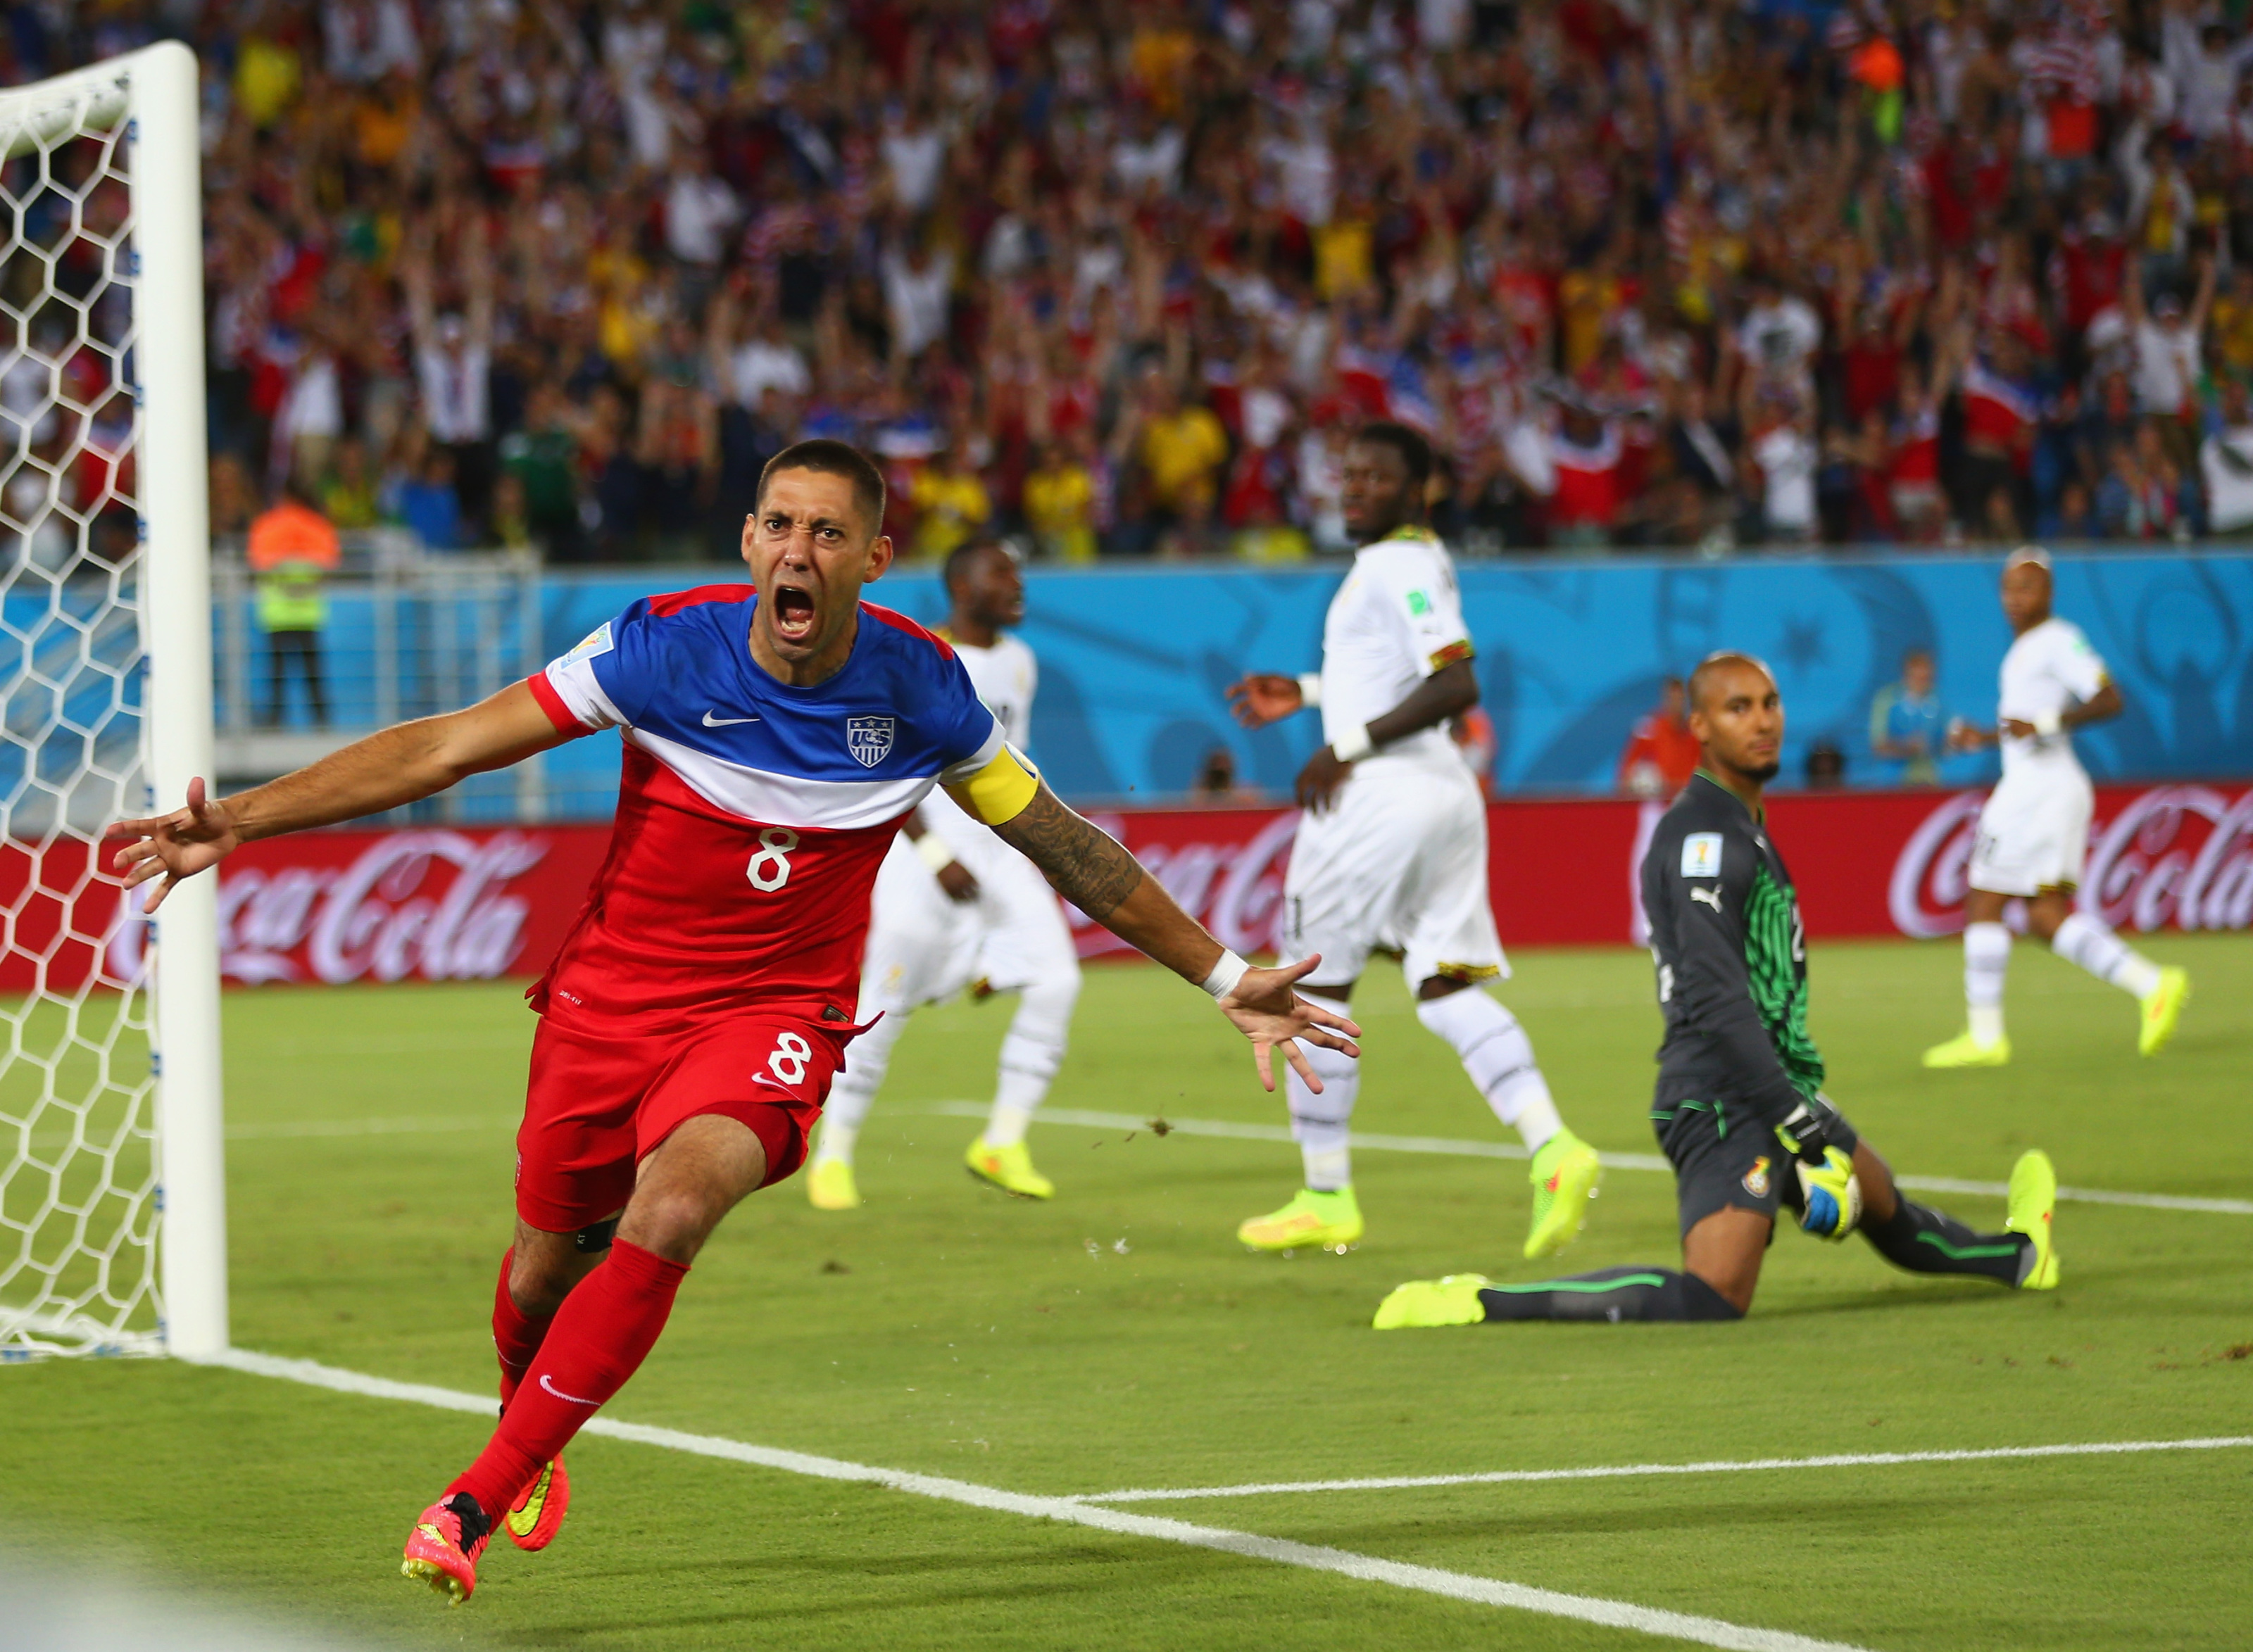 U.S. soccer star Clint Dempsey attributes success to God - Deseret